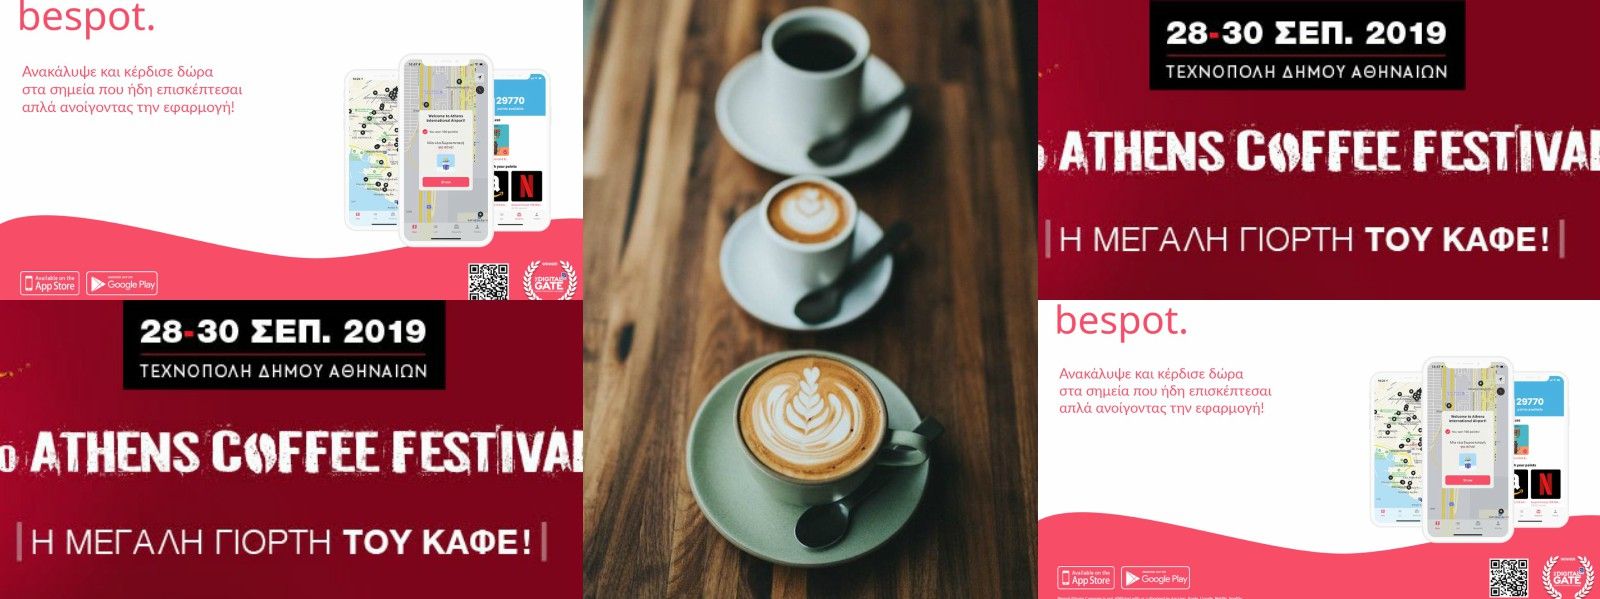 admin ajax.php?action=kernel&p=image&src=%7B%22file%22%3A%22wp content%2Fuploads%2F2019%2F09%2Fimages easyblog articles 8399 athens coffee festival 2019